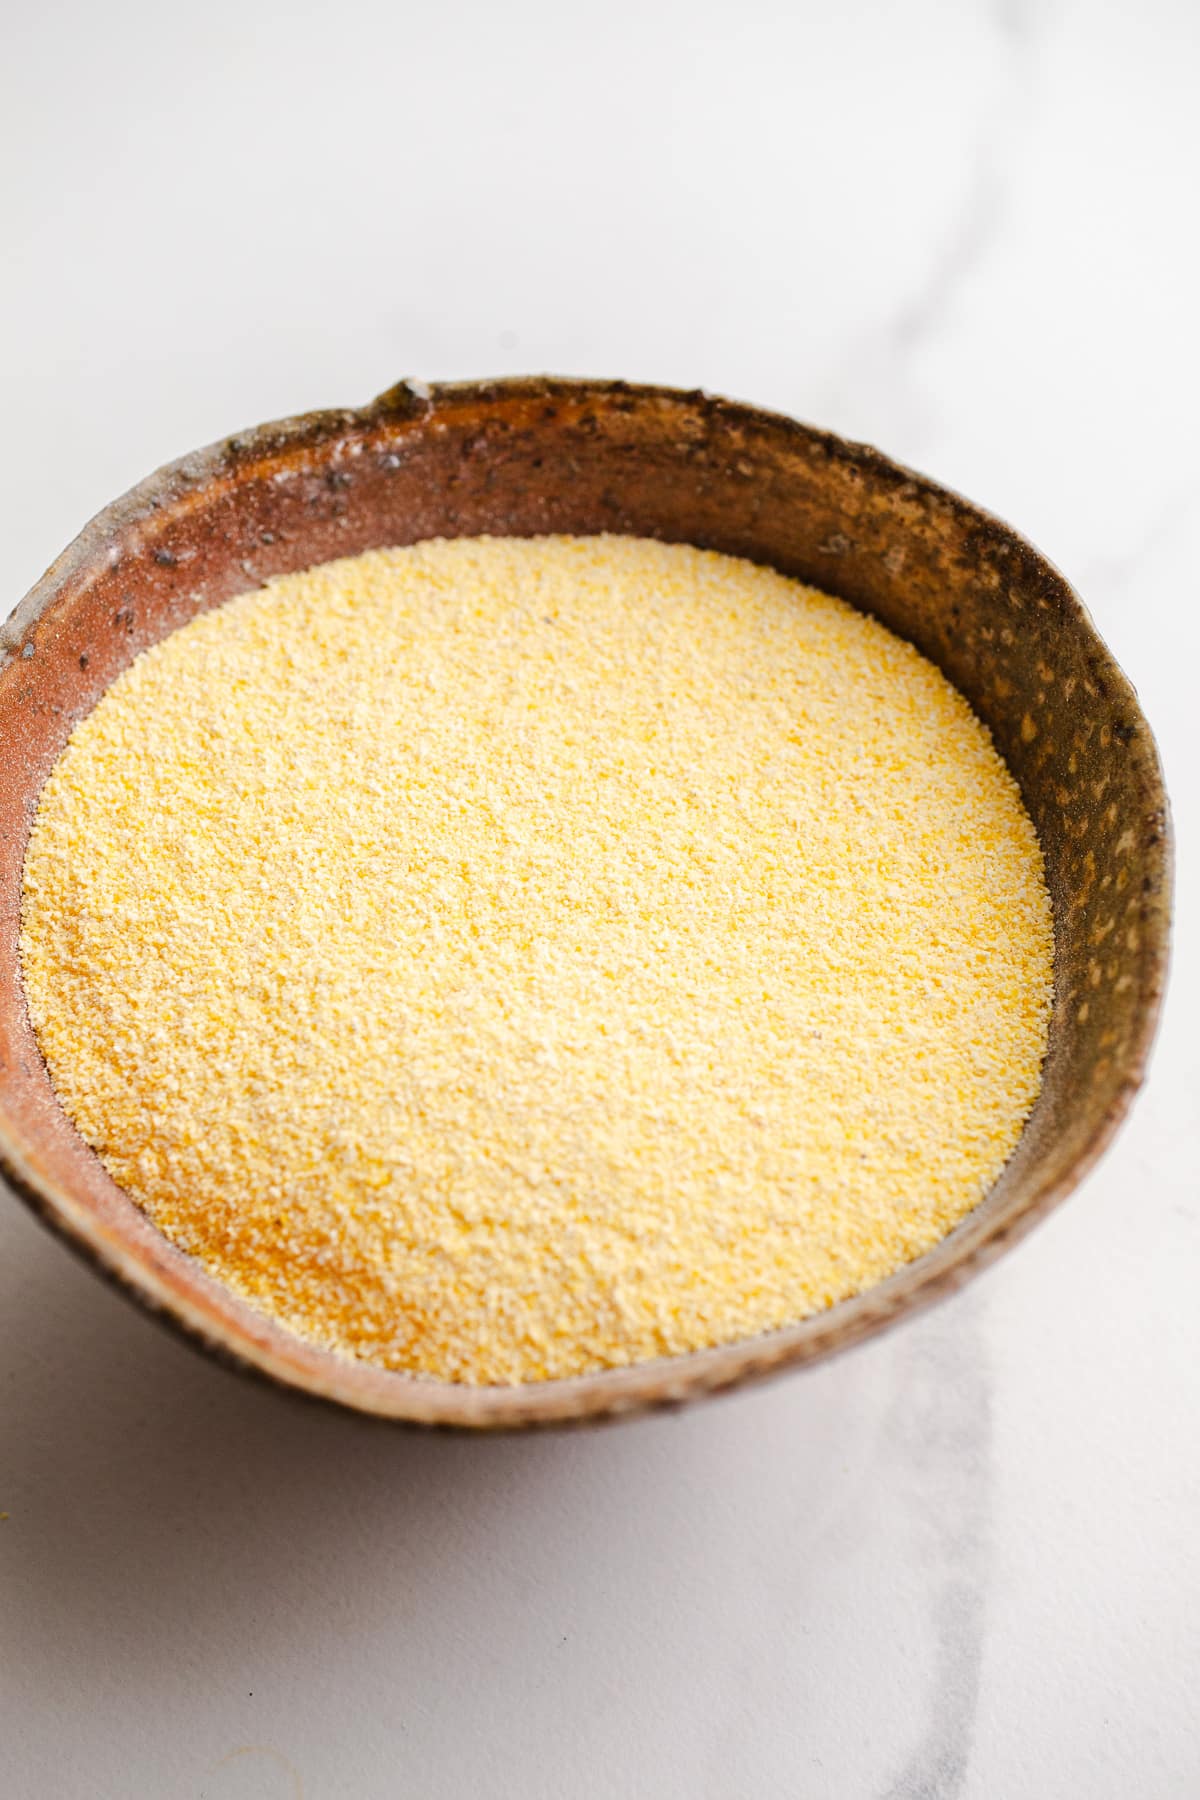 A large bowl of cornmeal.